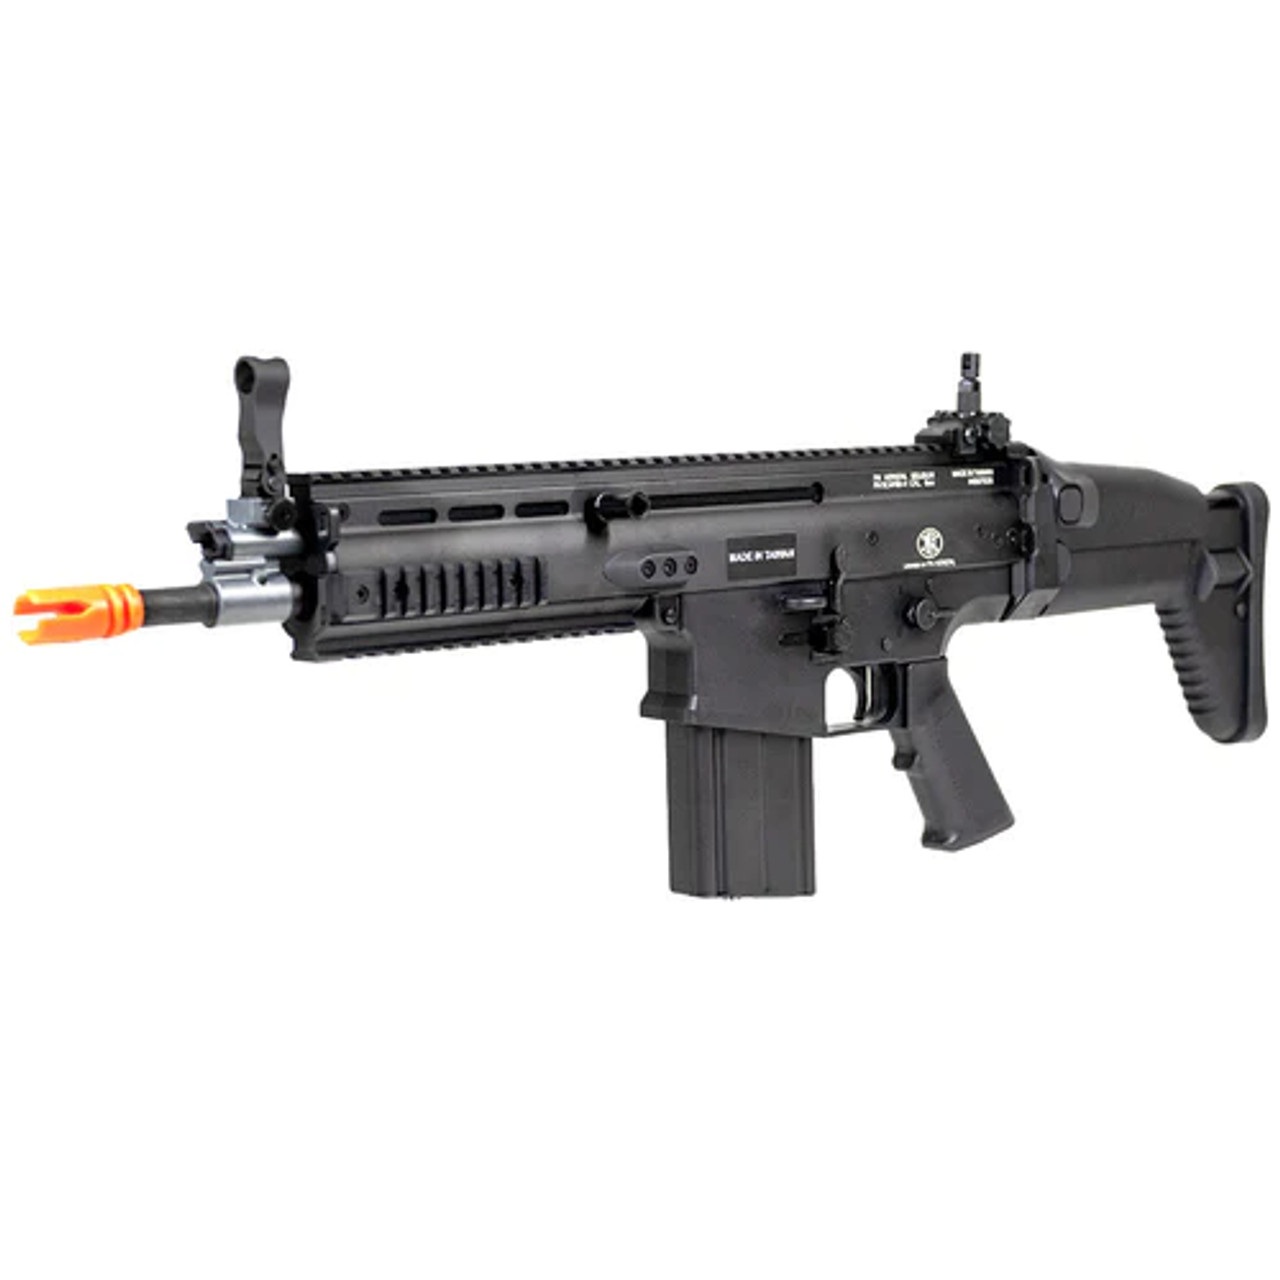 Cybergun FN Herstal SCAR-H CQC AEG by VFC (Black)